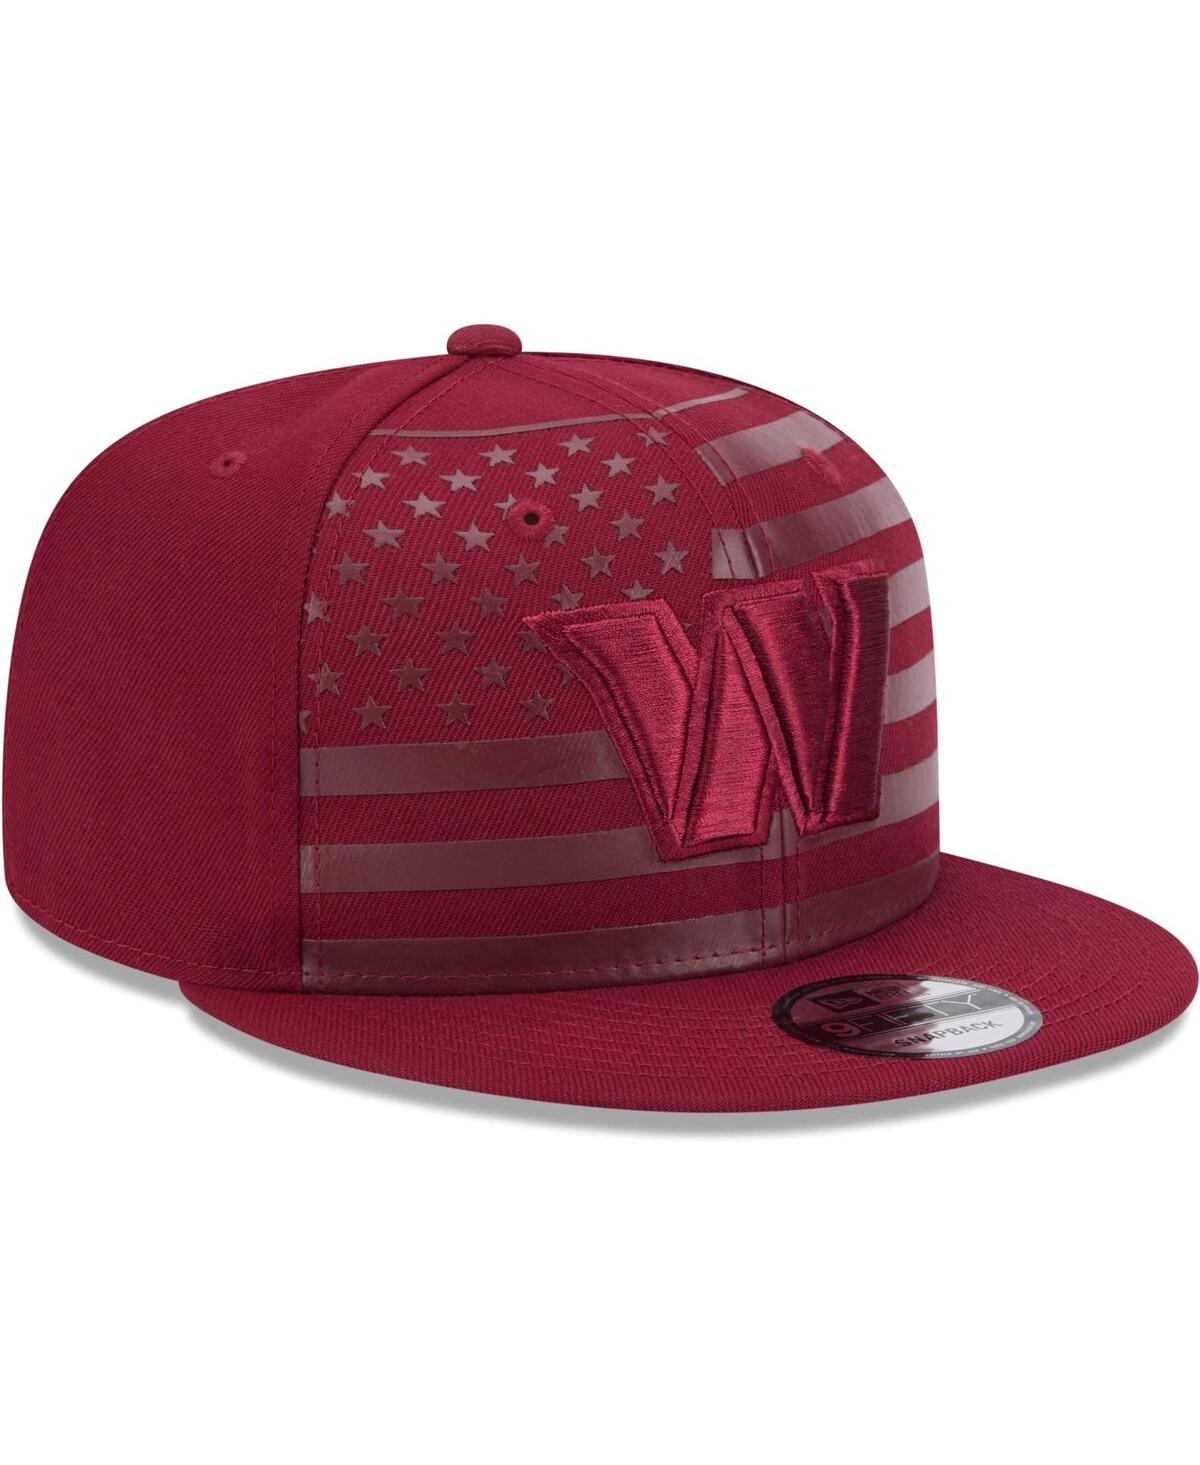 Shop New Era Men's Burgundy Washington Commanders Independent 9fifty Snapback Hat